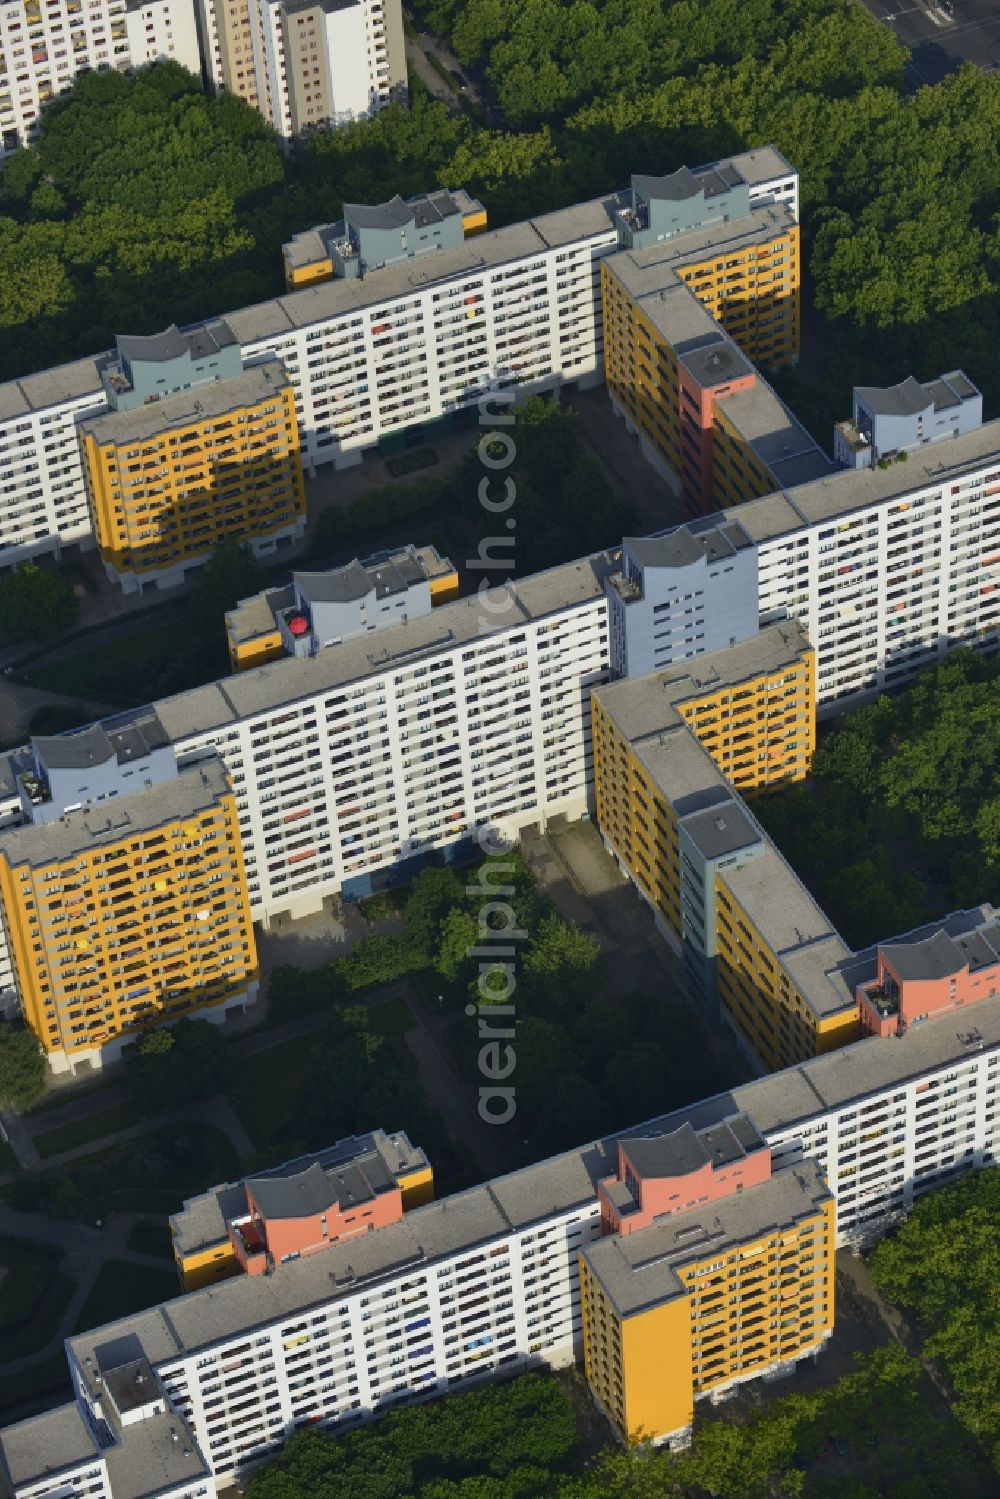 Aerial photograph Berlin Reinickendorf - Facades - restored with prefabricated housing estate - skyscrapers in Tegel - Reinickendorf in Berlin